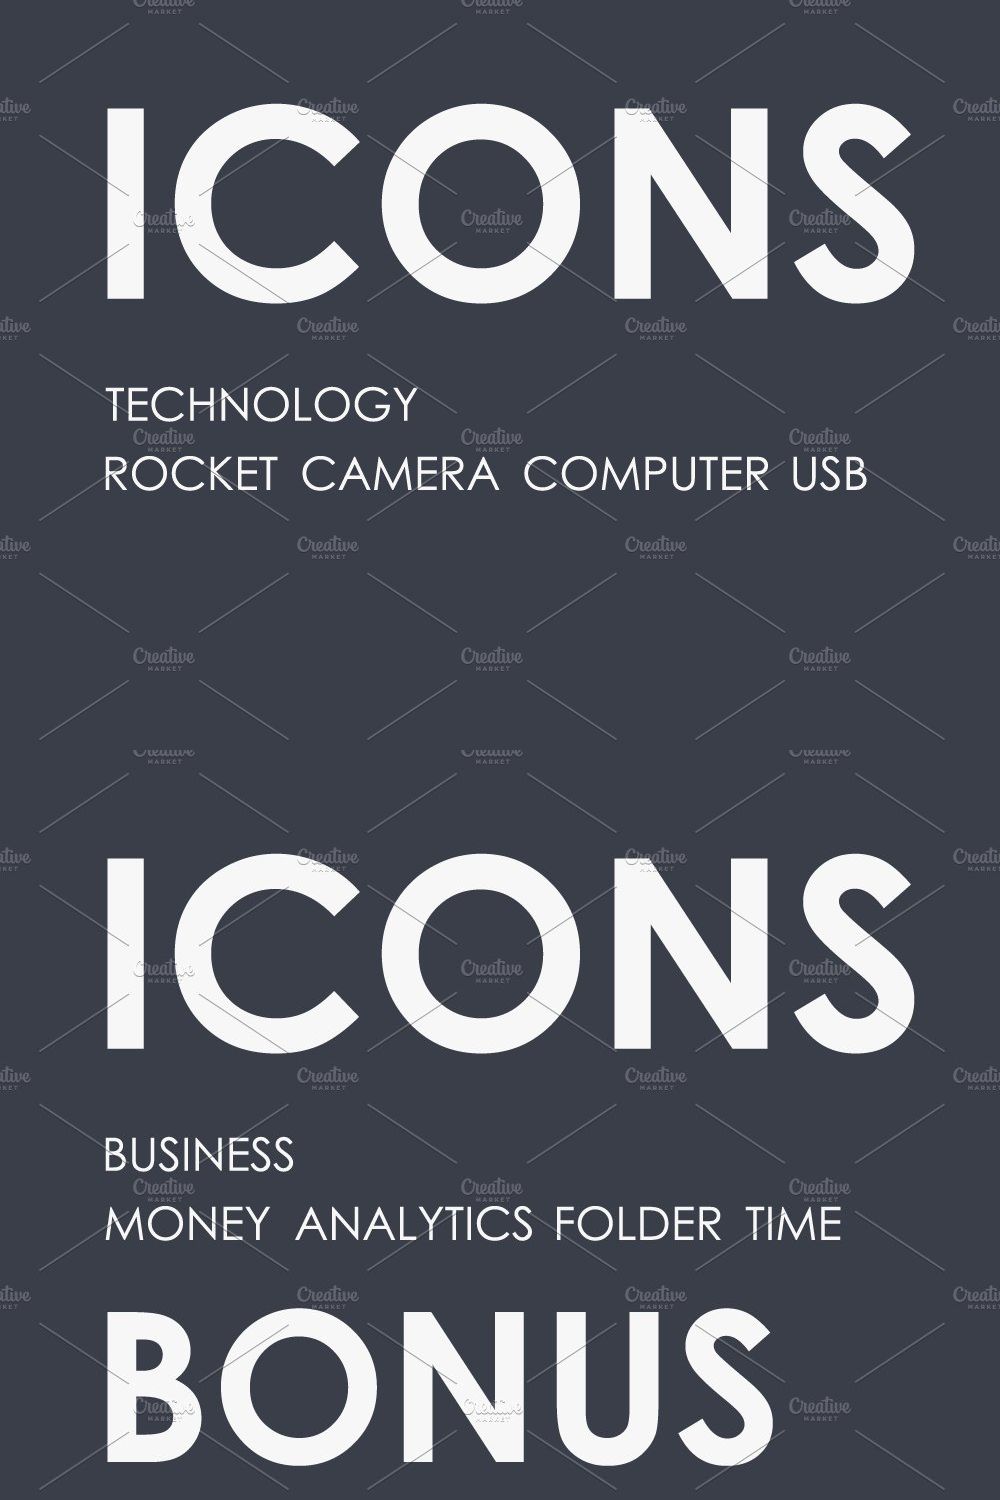 Technology thinline icons + BONUS pinterest preview image.